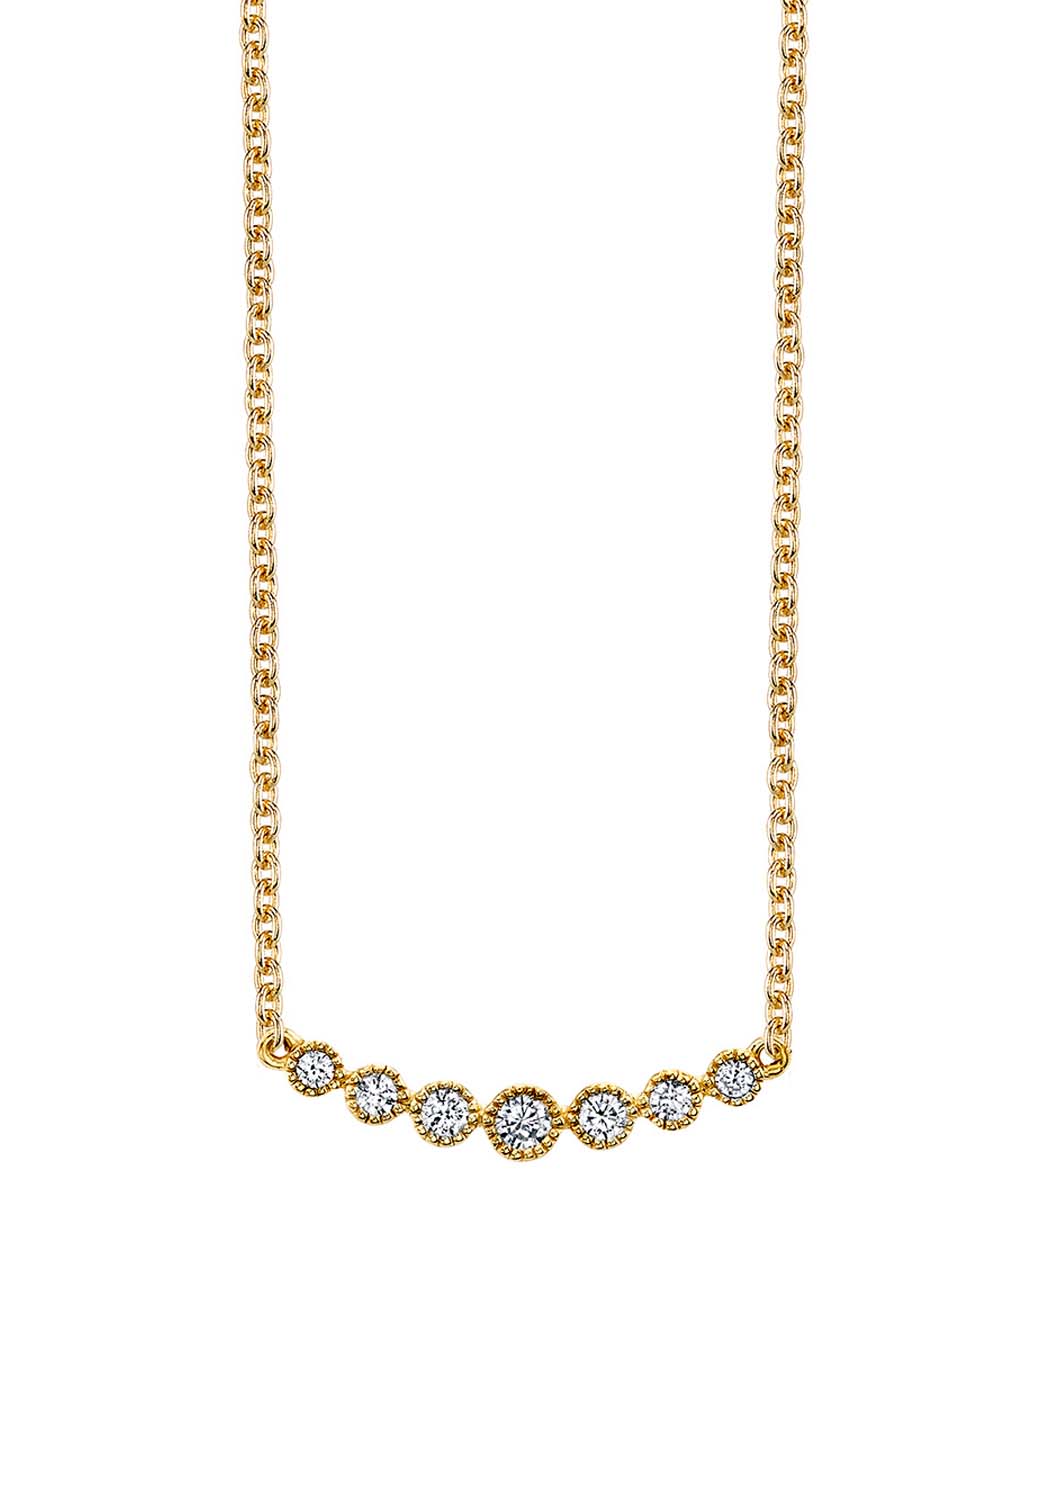 Parade Design 18k Yellow Gold 7 Diamond Necklace | OsterJewelers.com